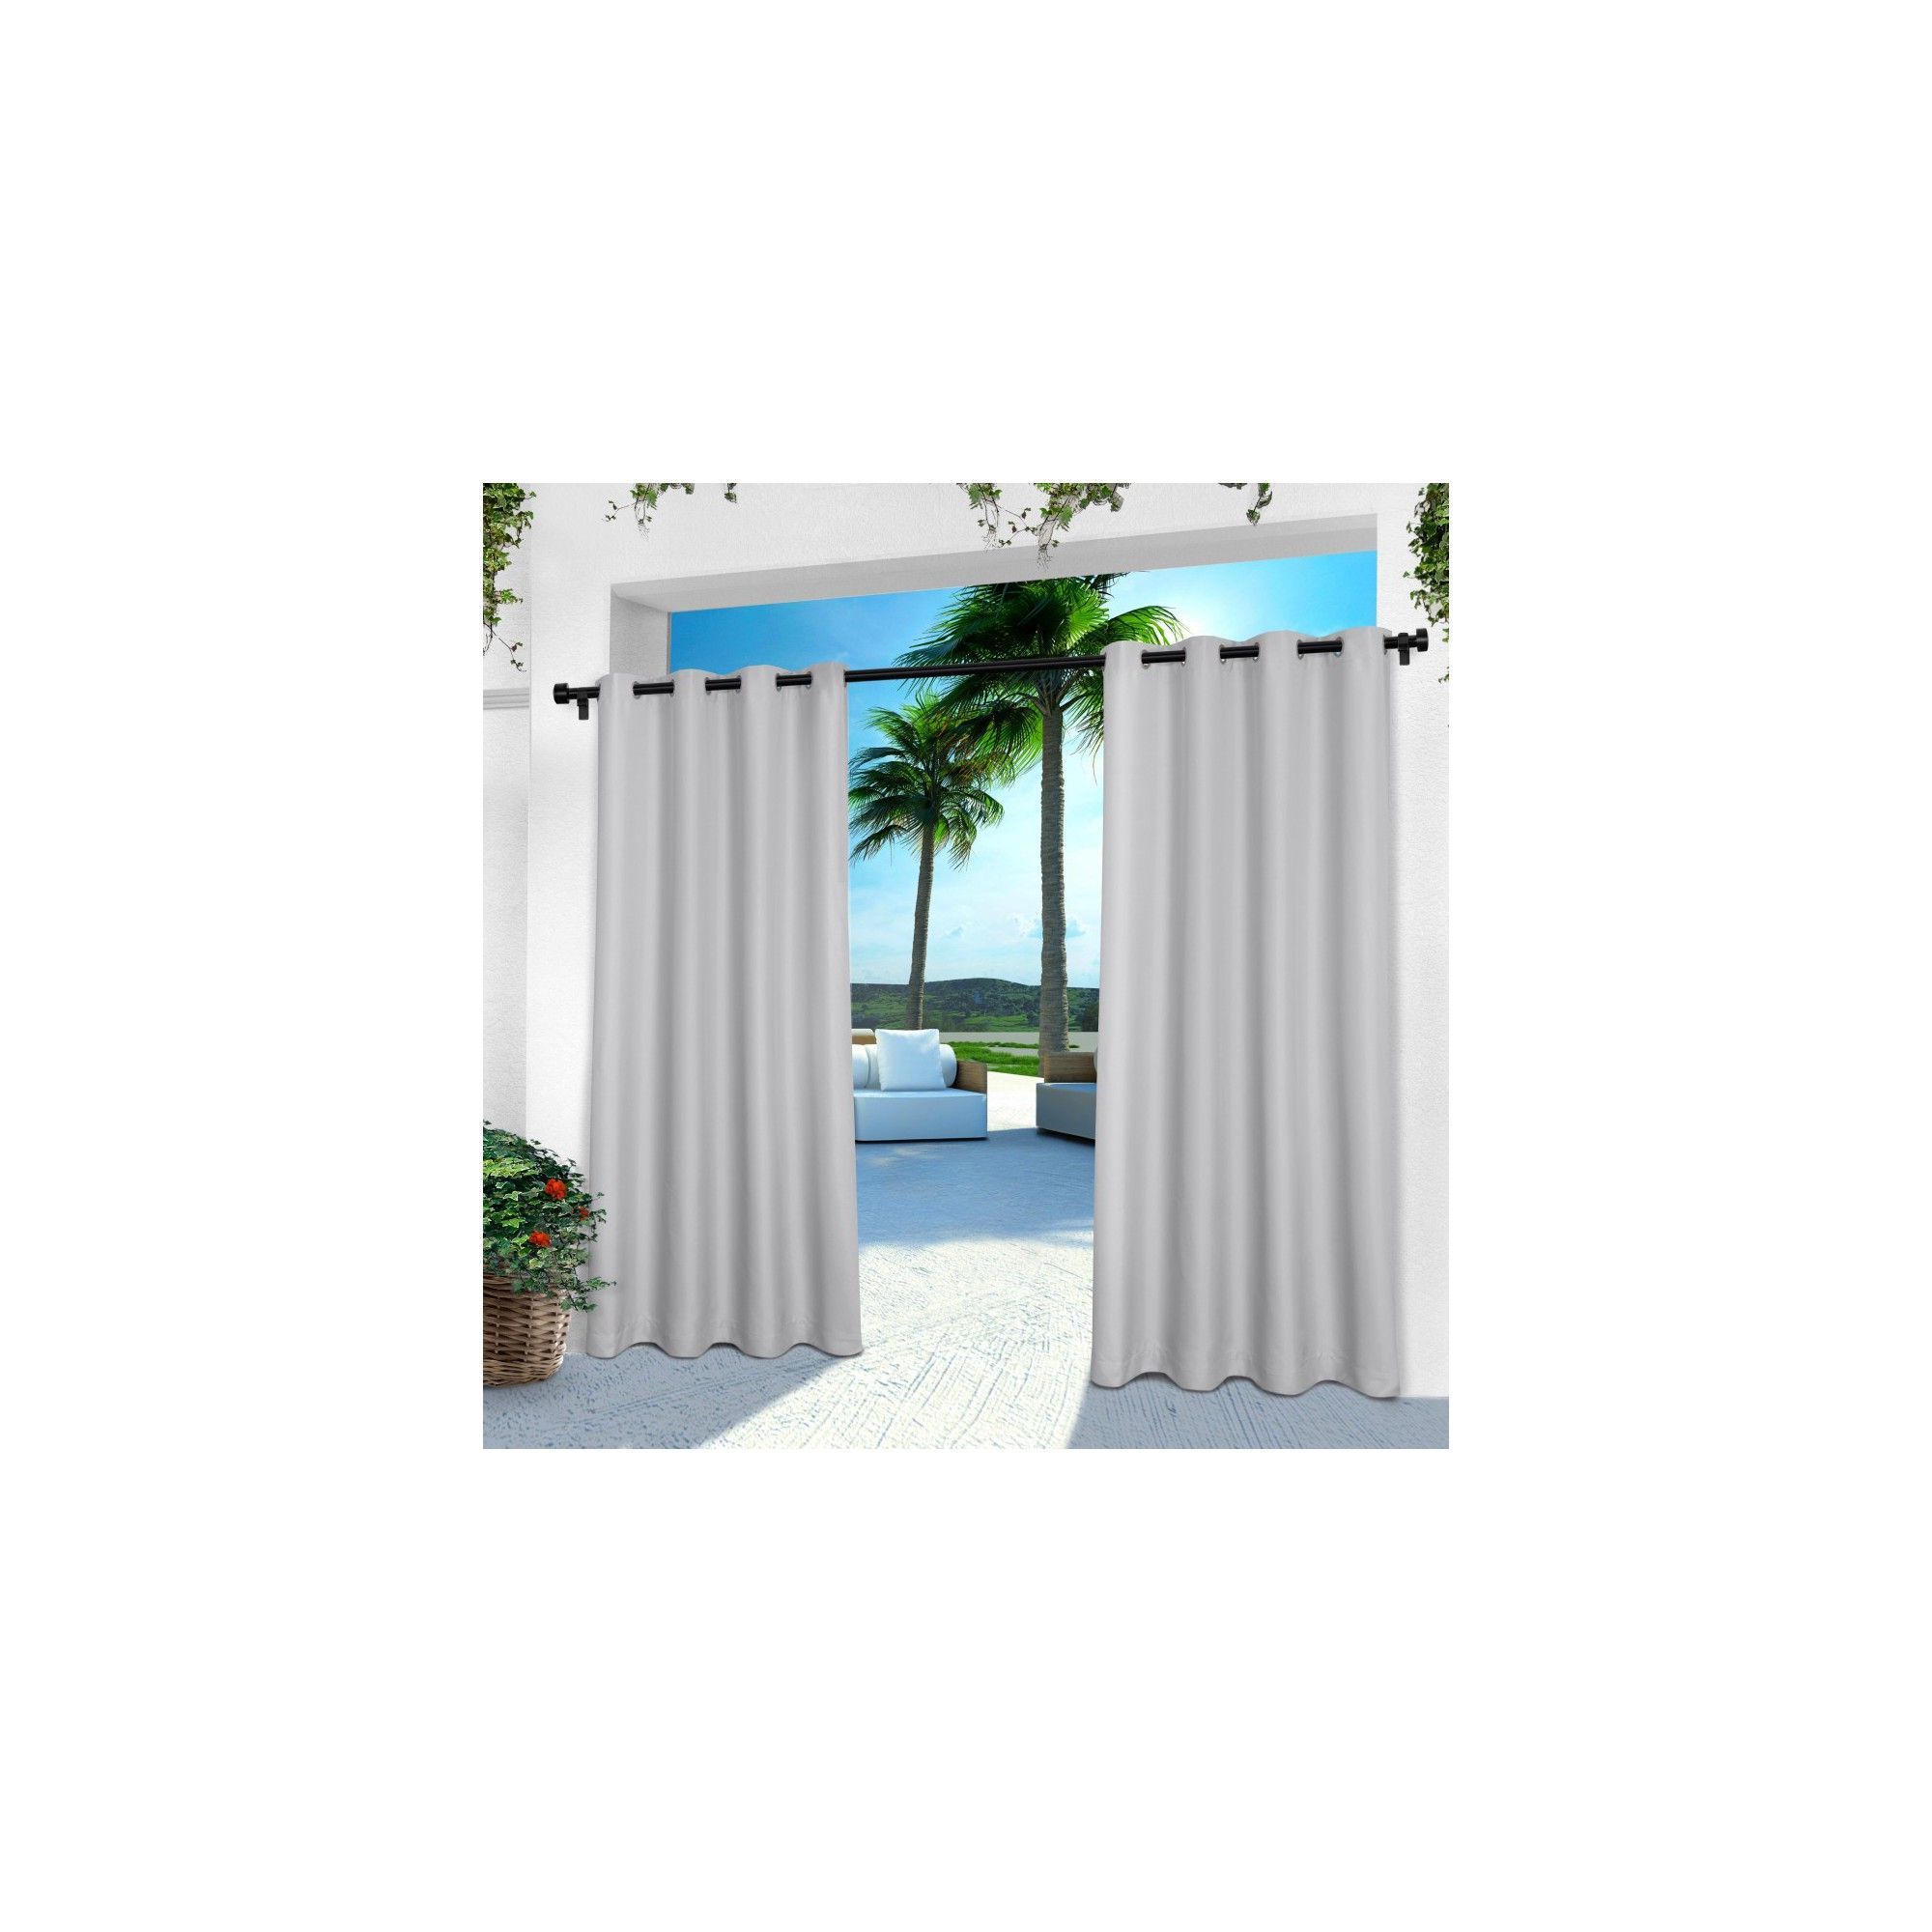 Indoor/outdoor Solid Cabana Grommet Top Curtain Panel Pairs With Well Known 54"x120" Indoor/outdoor Solid Cabana Grommet Top Window (View 11 of 20)